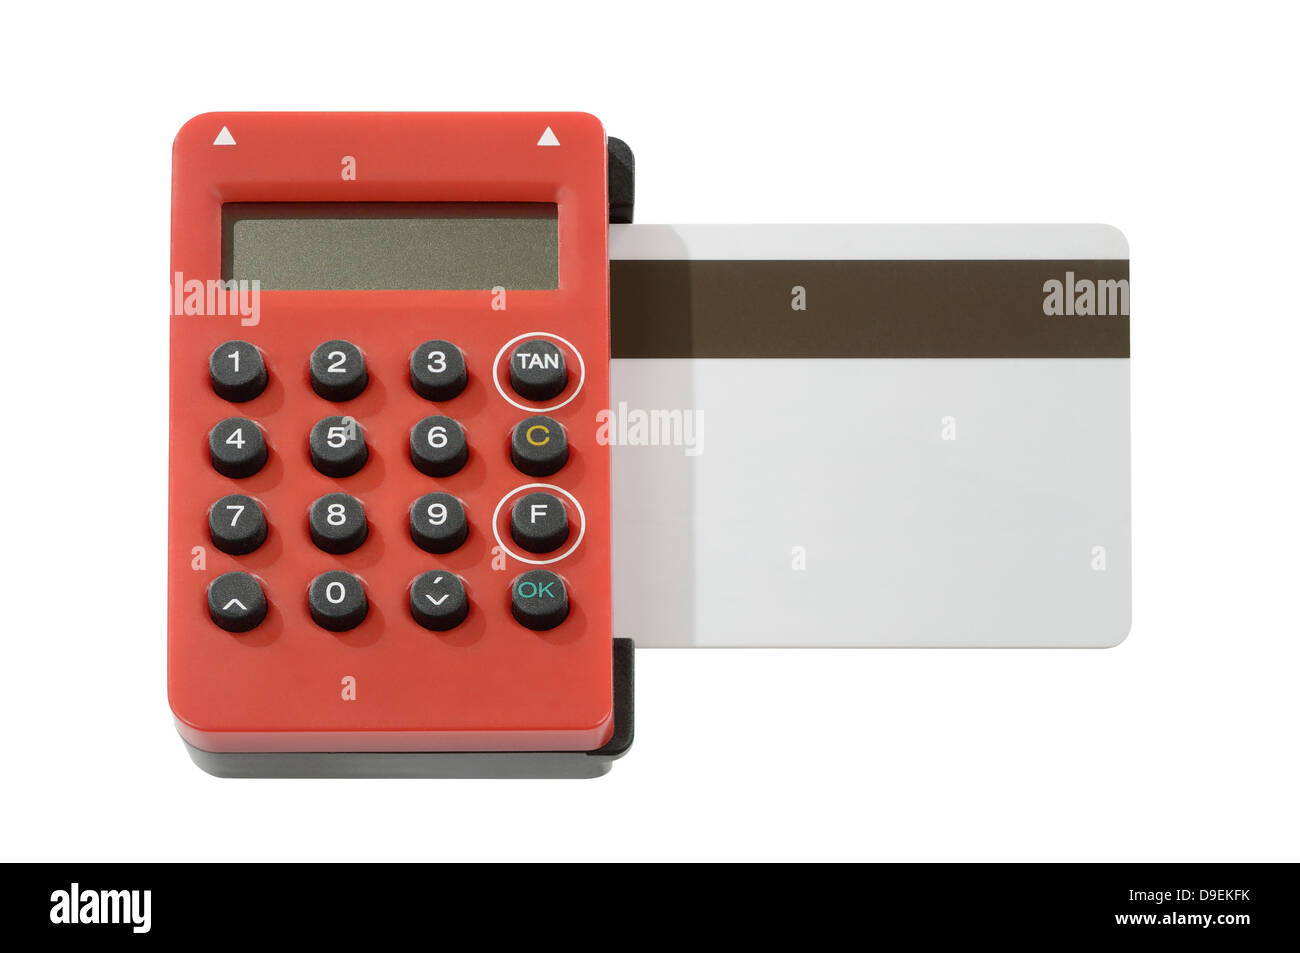 Pin tan code number generator for internet banking transaction Stock Photo  - Alamy